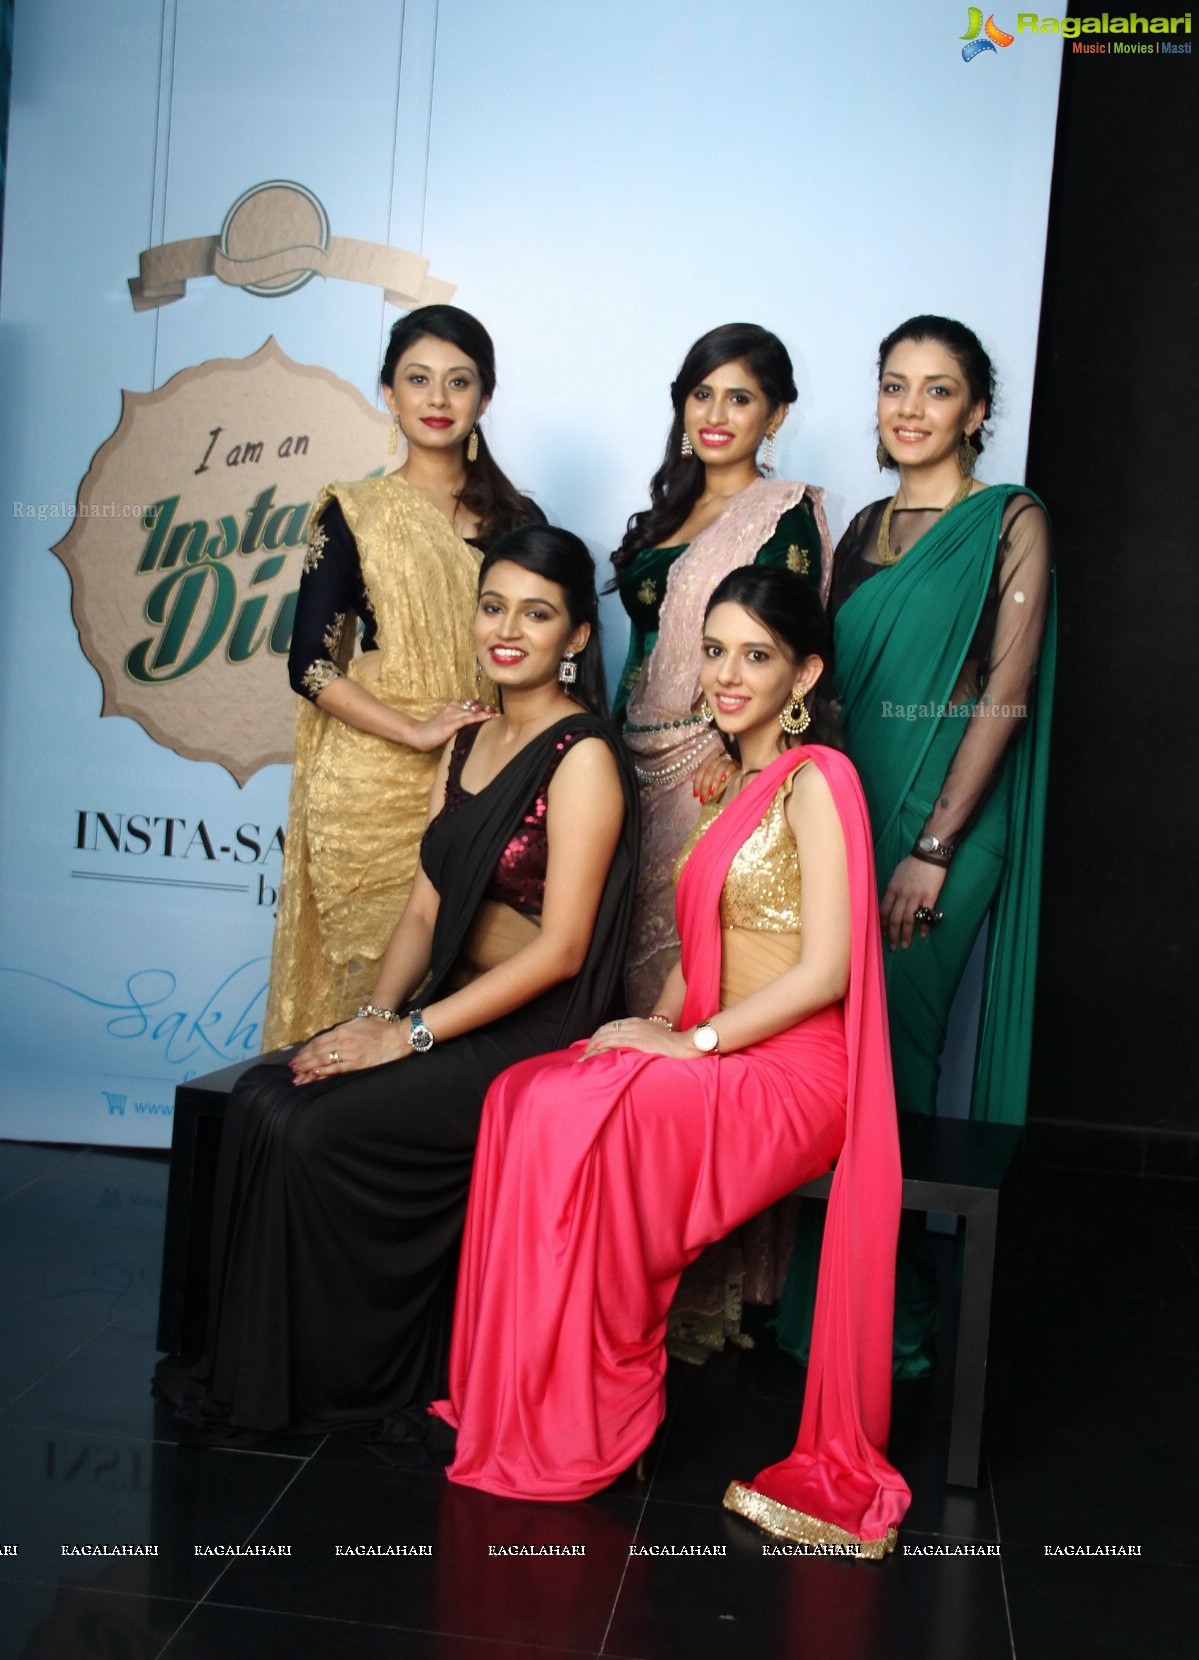 Sakhi launches the Insta Saree